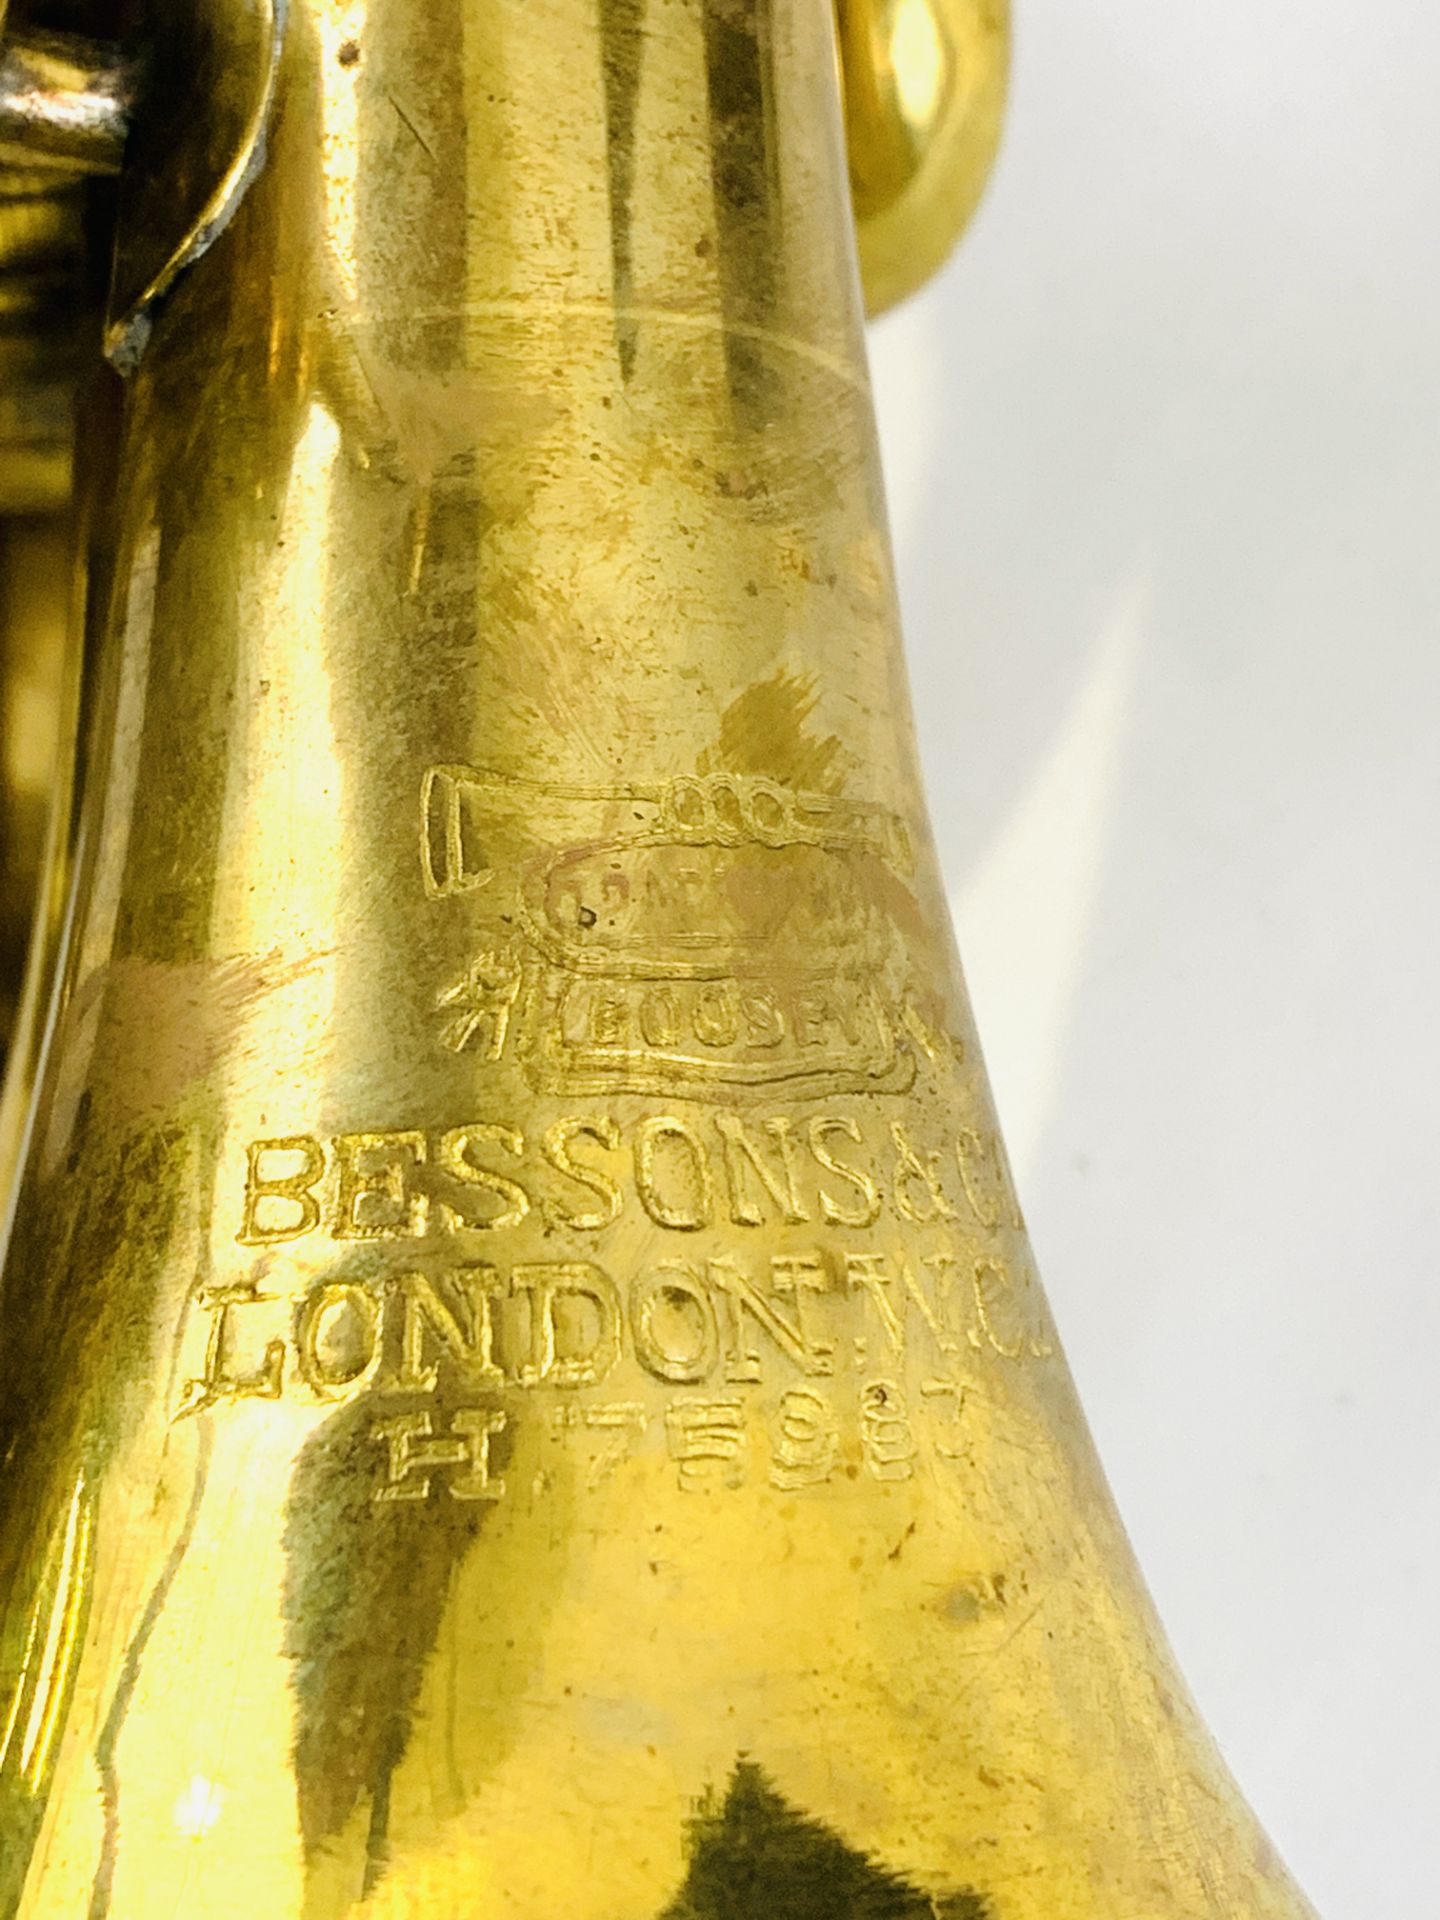 Brass pocket cornet in original case - Image 2 of 3